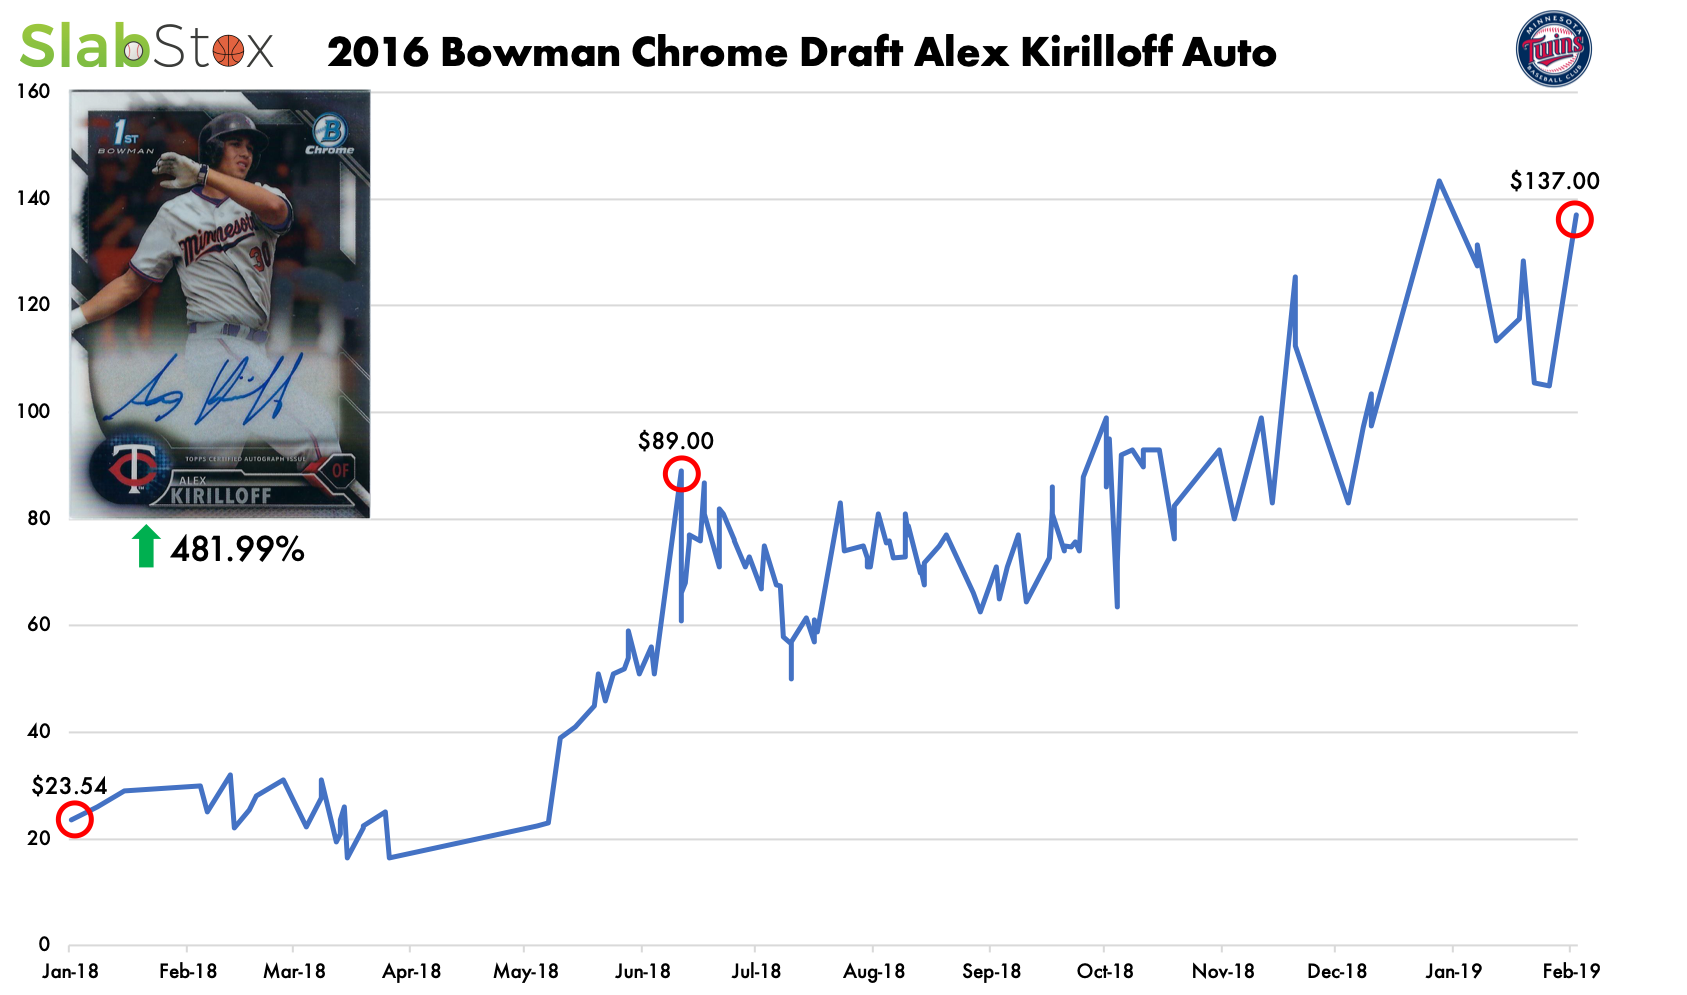 SlabStox infographic for 2016 Bowman Chrome Draftr Alex Kirilloff Auto sports trading card